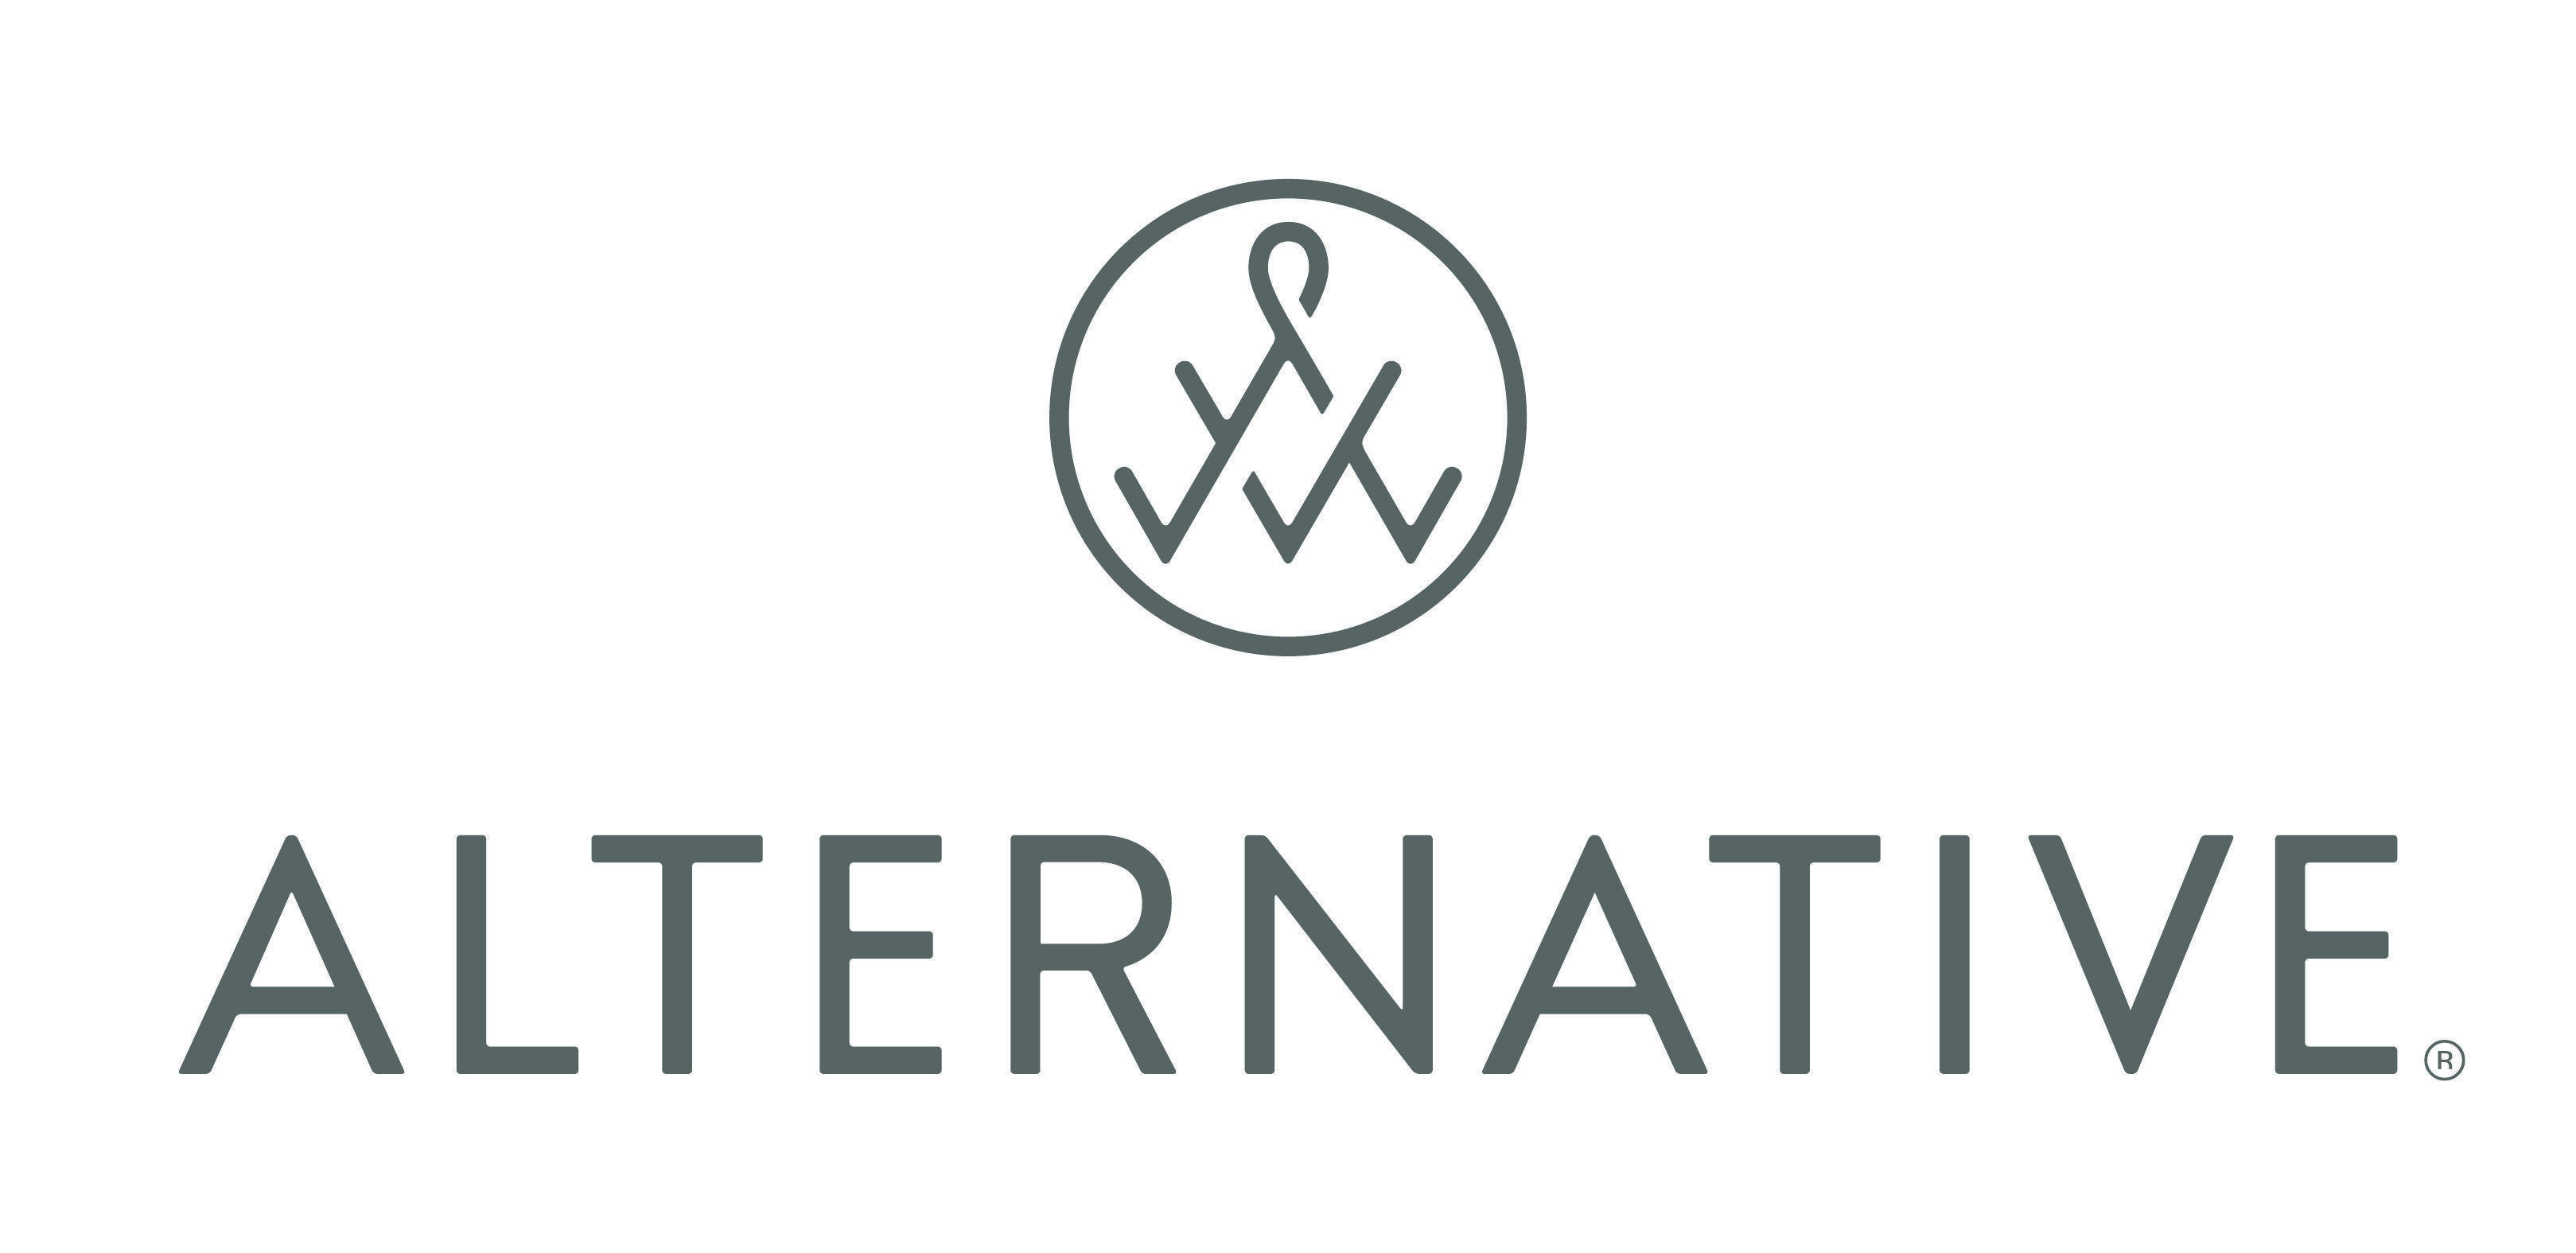 Alternative Logo - Alternative Apparel | Wellmade Companies | Clothing logo, Logos ...